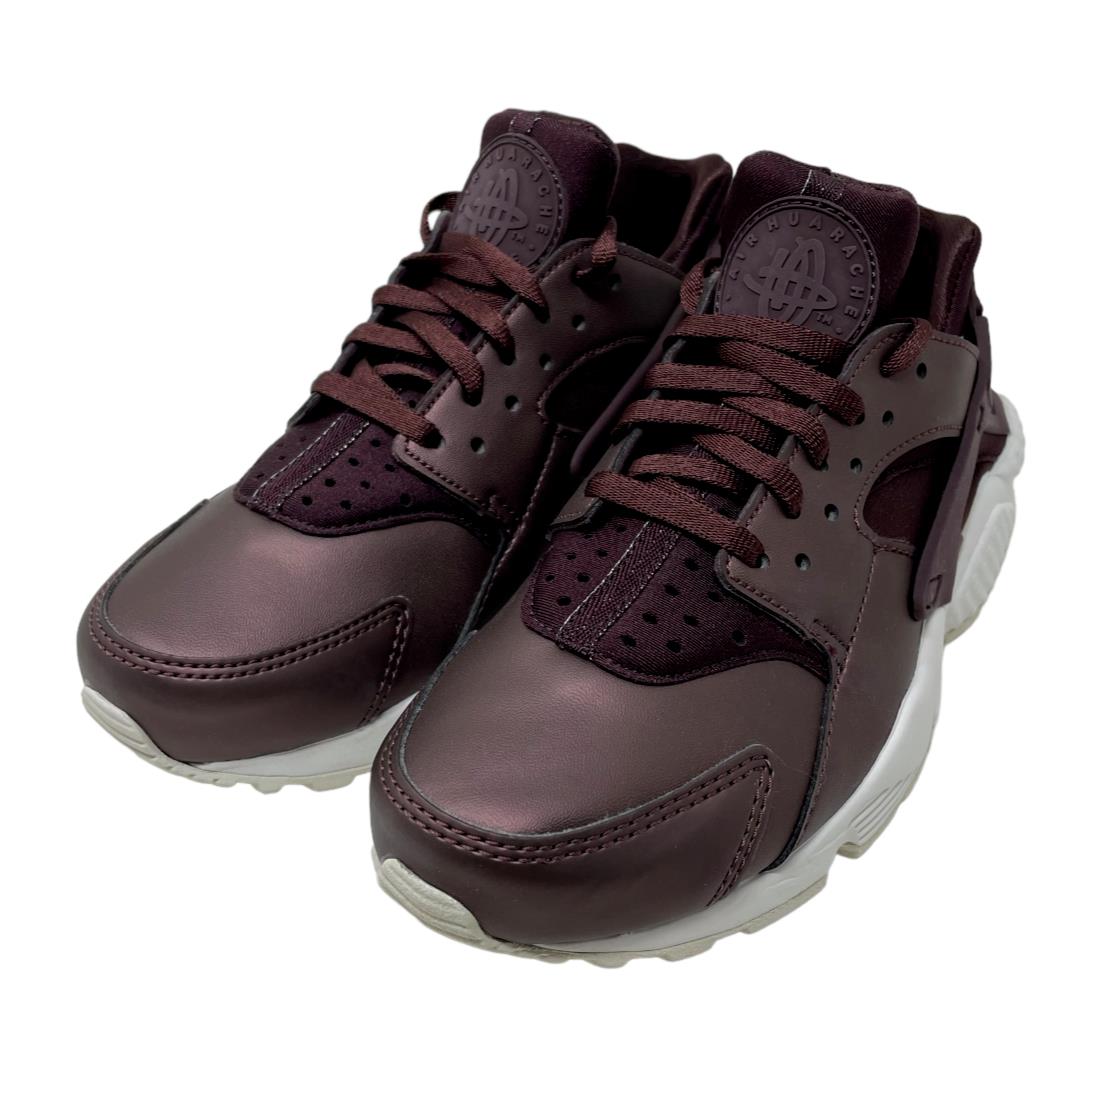 Nike Air Huarache Run Prm Txt Womens Size 10.5 Shoes AA0523 202 NO Lid - Multicolor